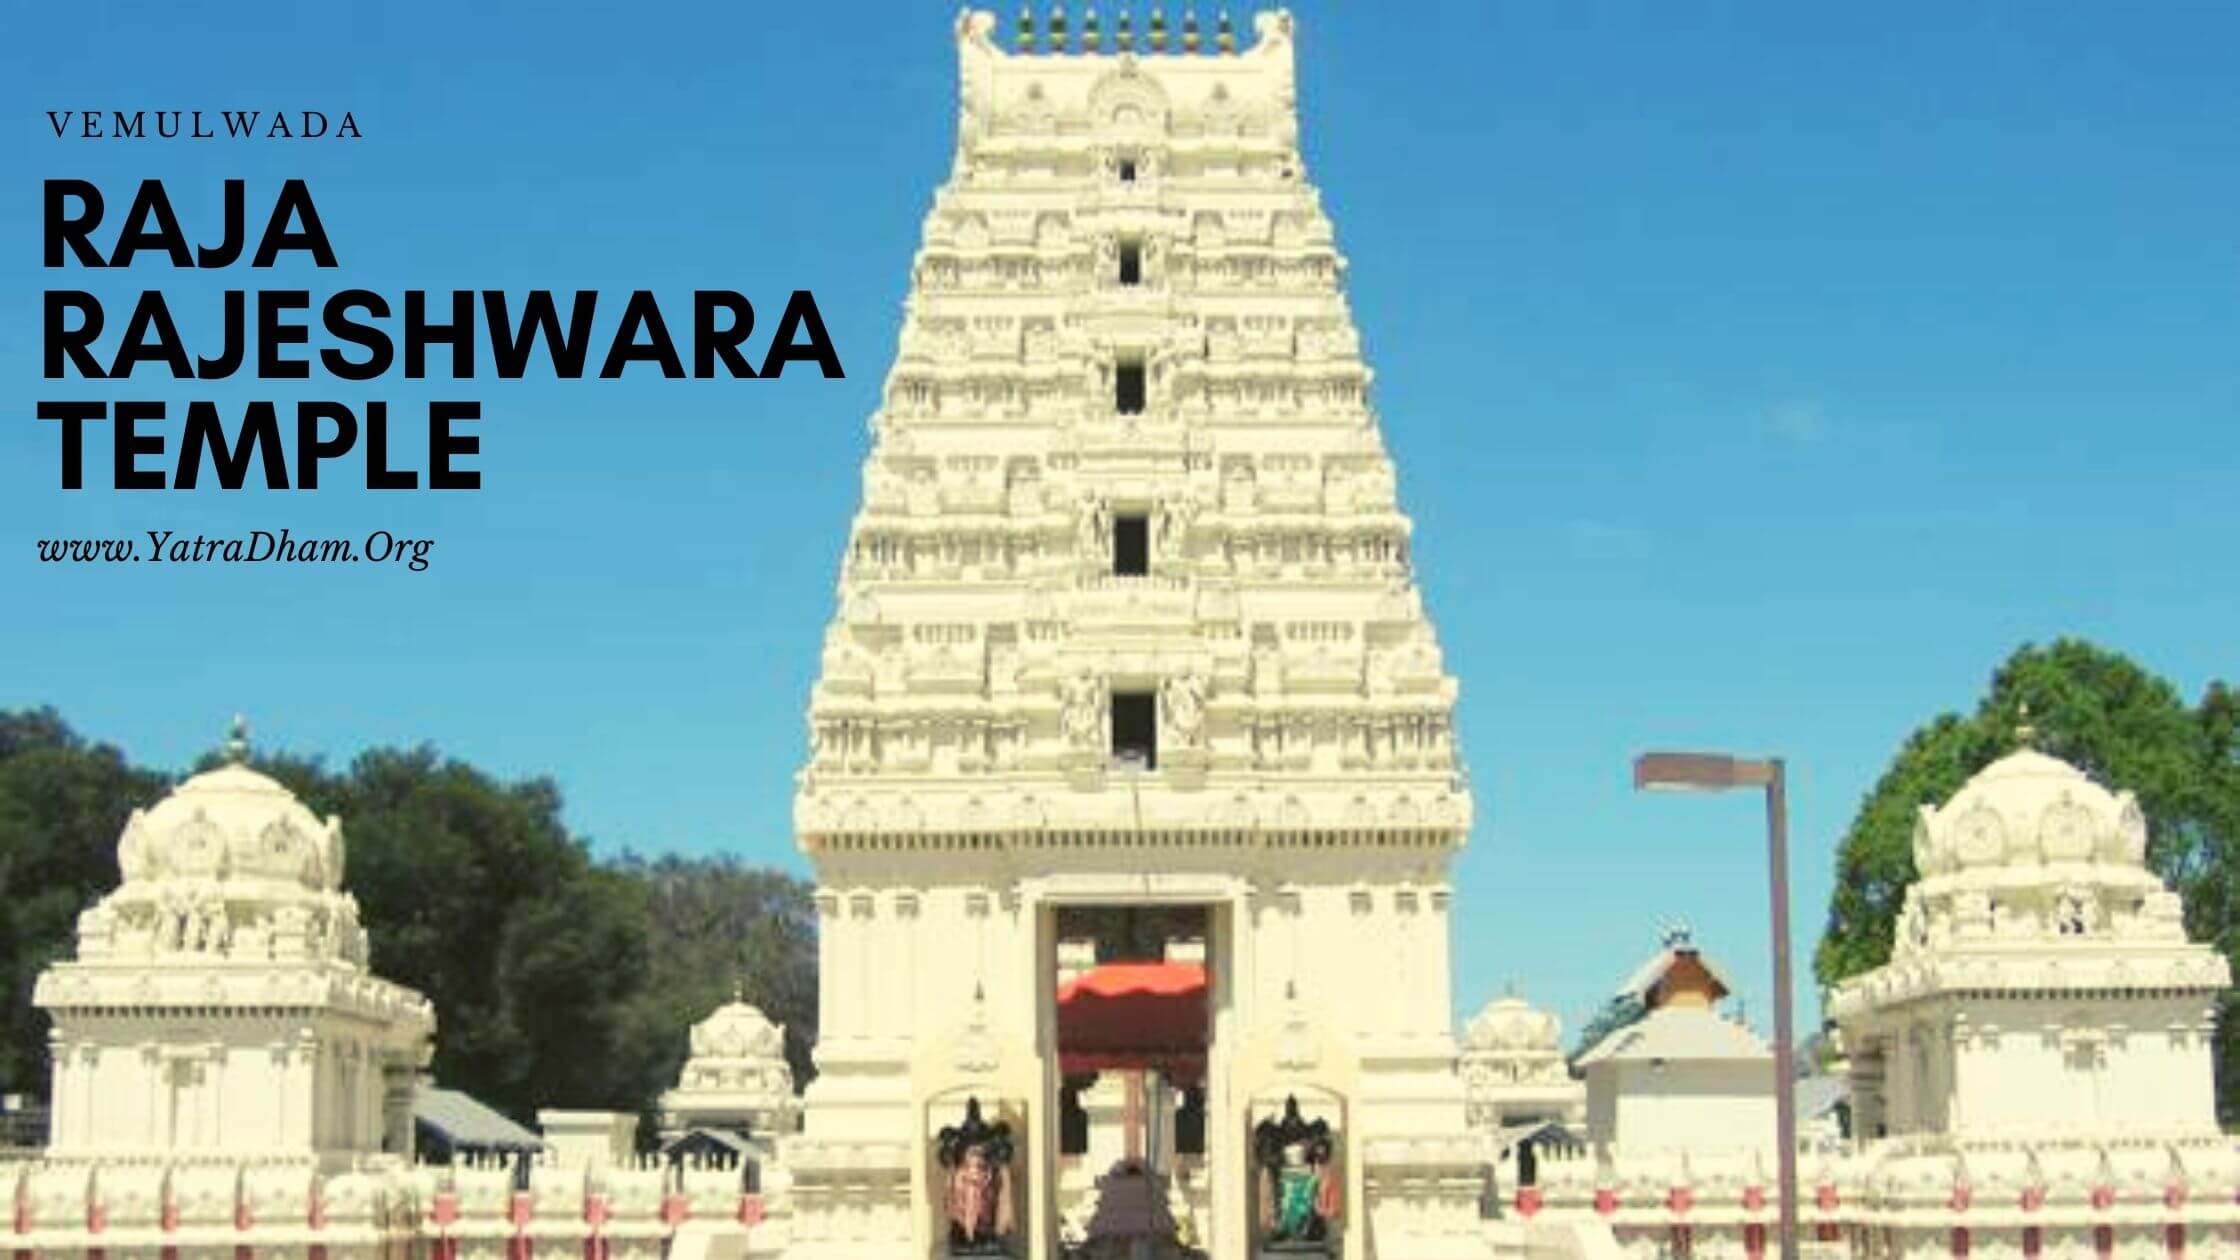 Raja Rajeshwara Temple,Vemulwada